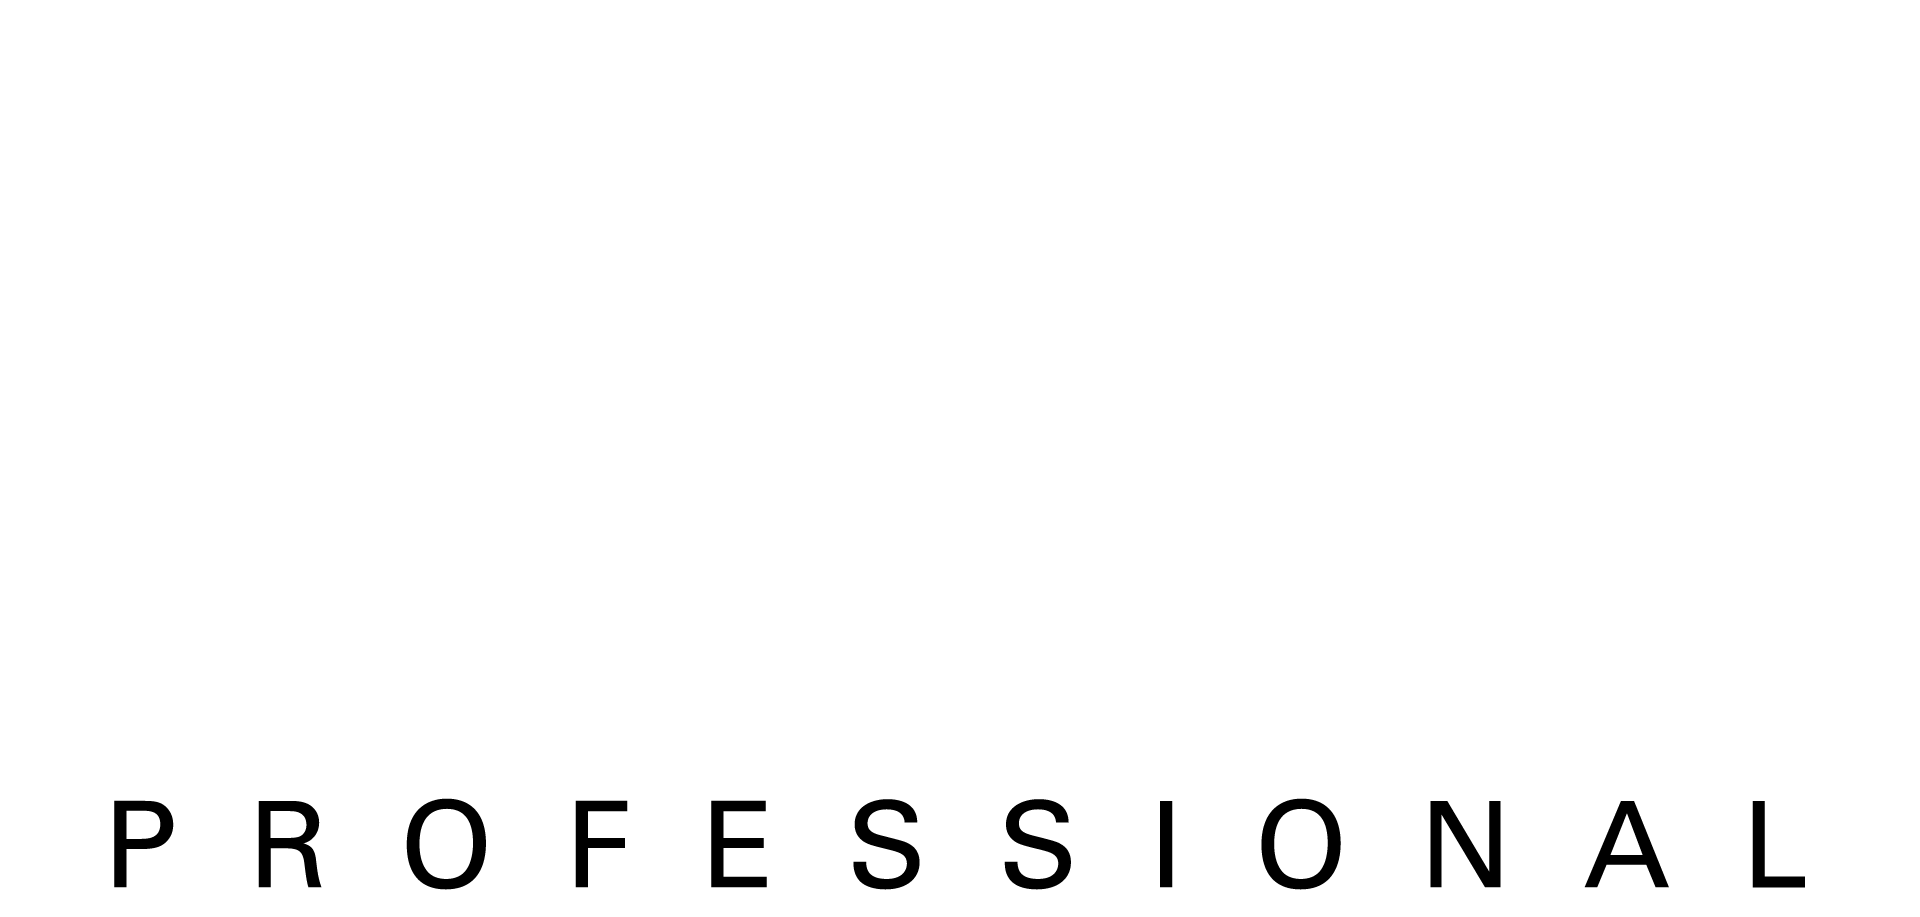 Skin Research Laboratories Professional logo